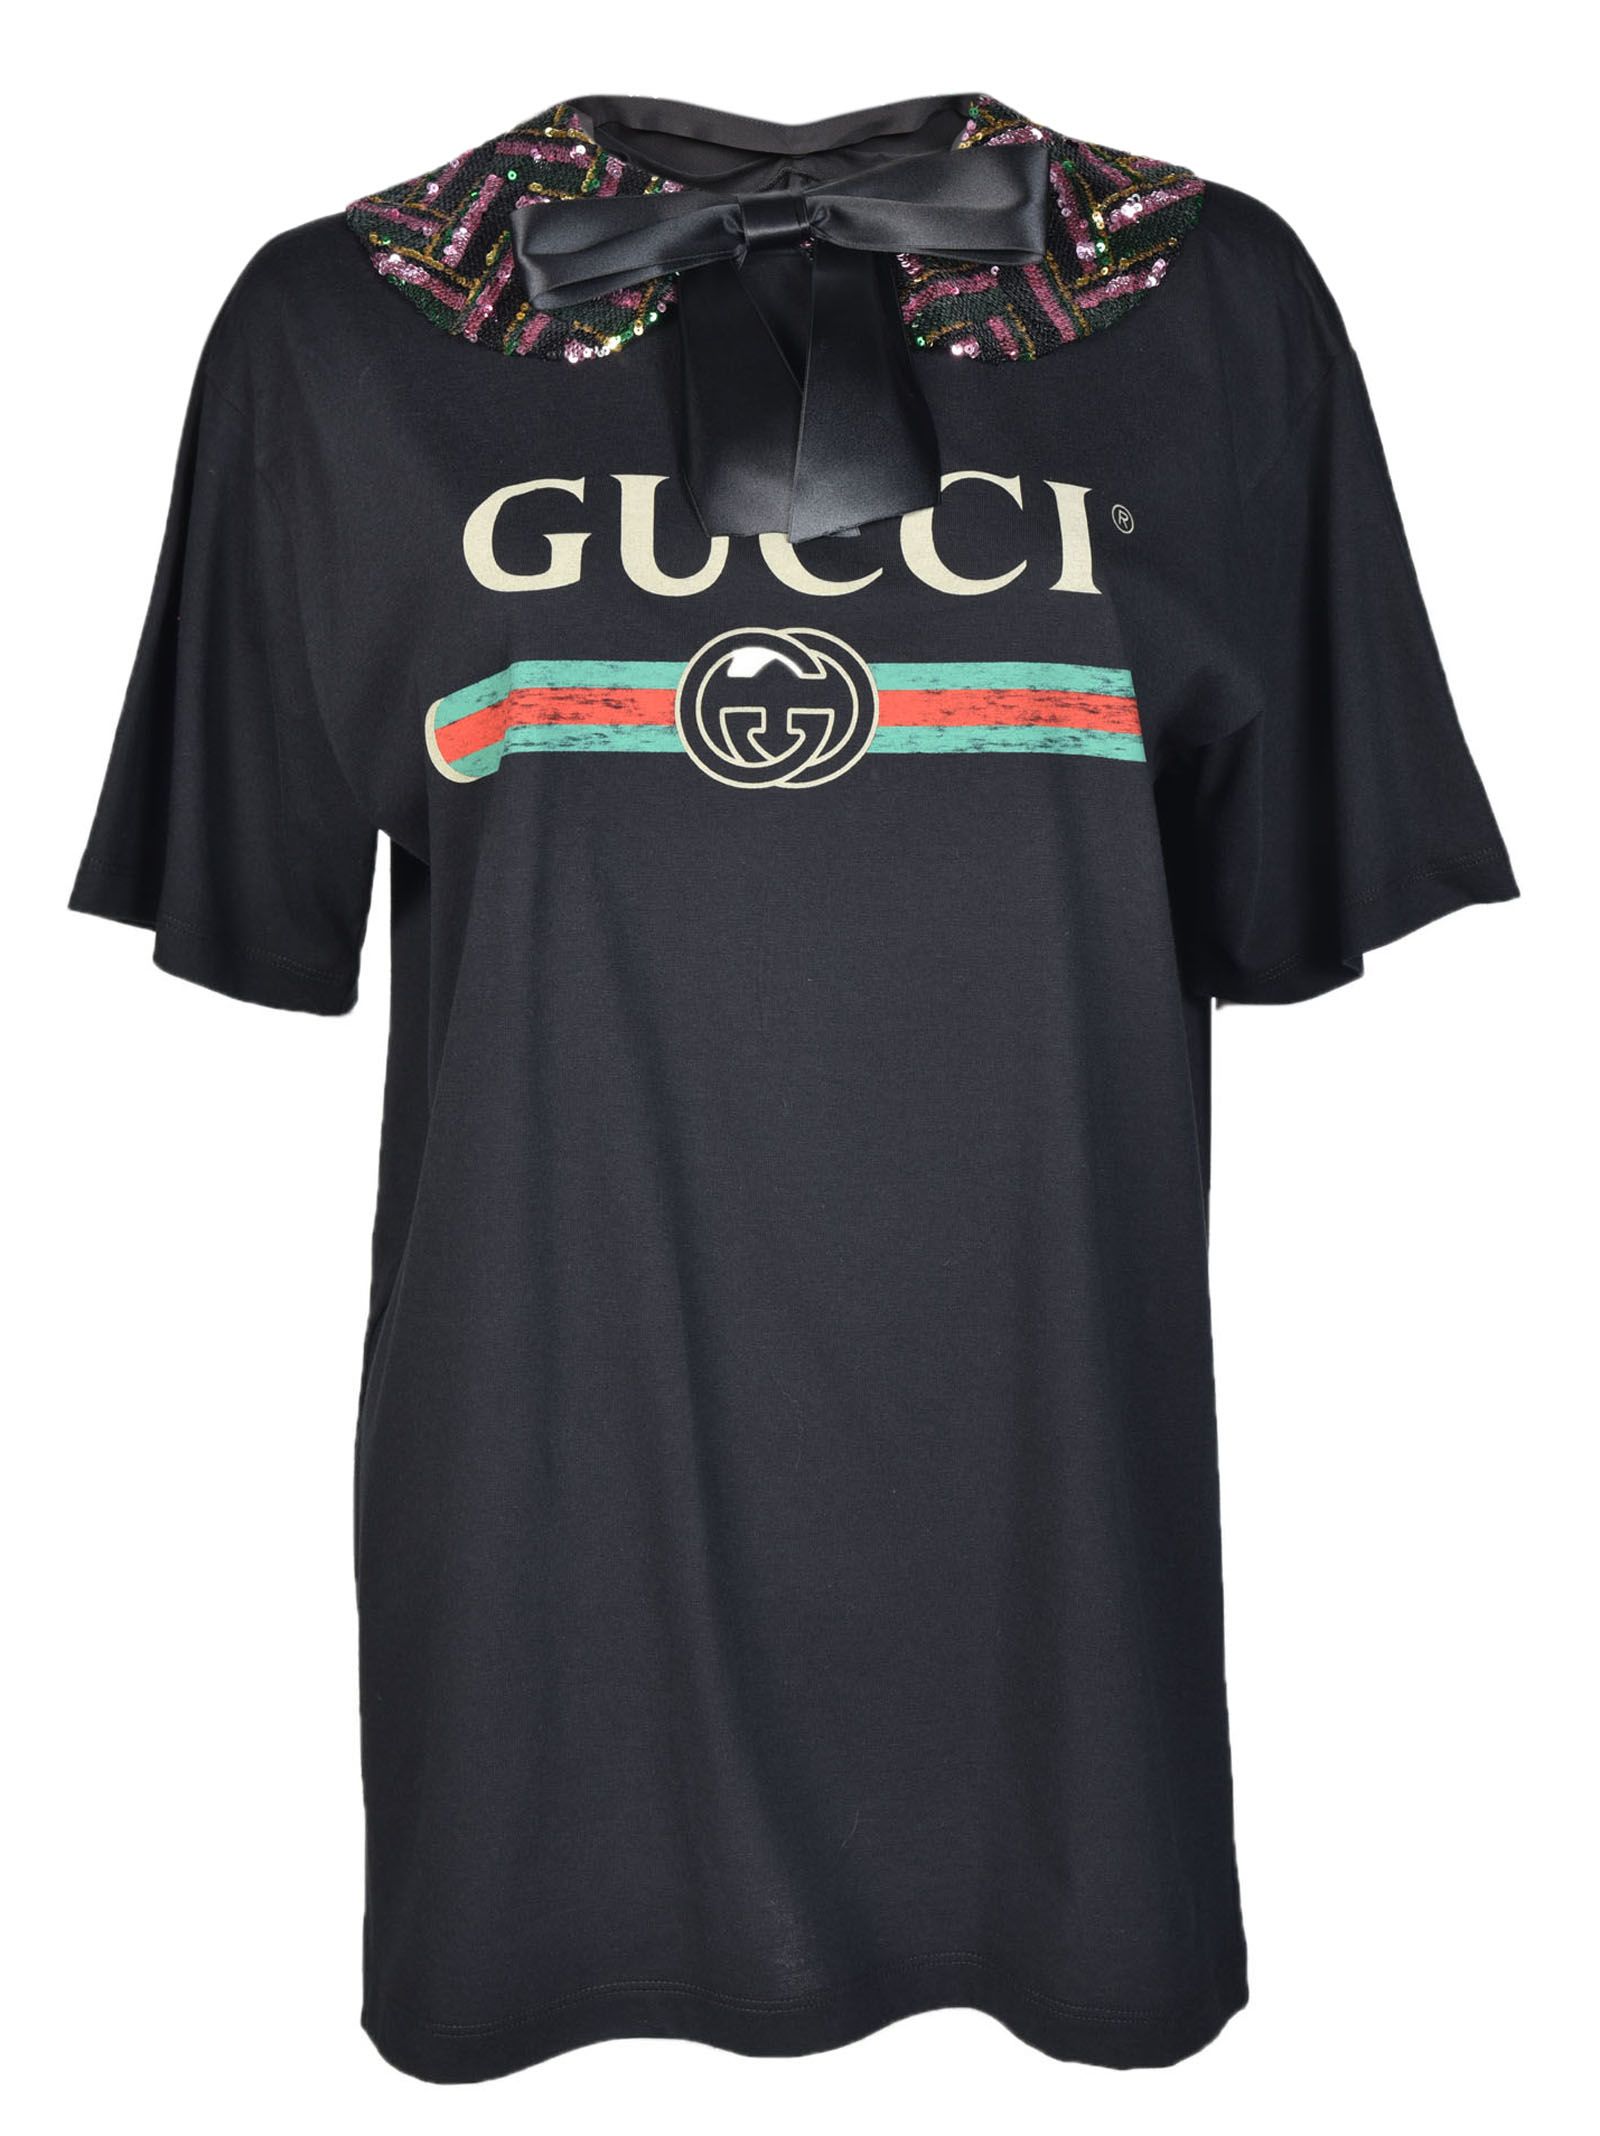 Gucci black tee